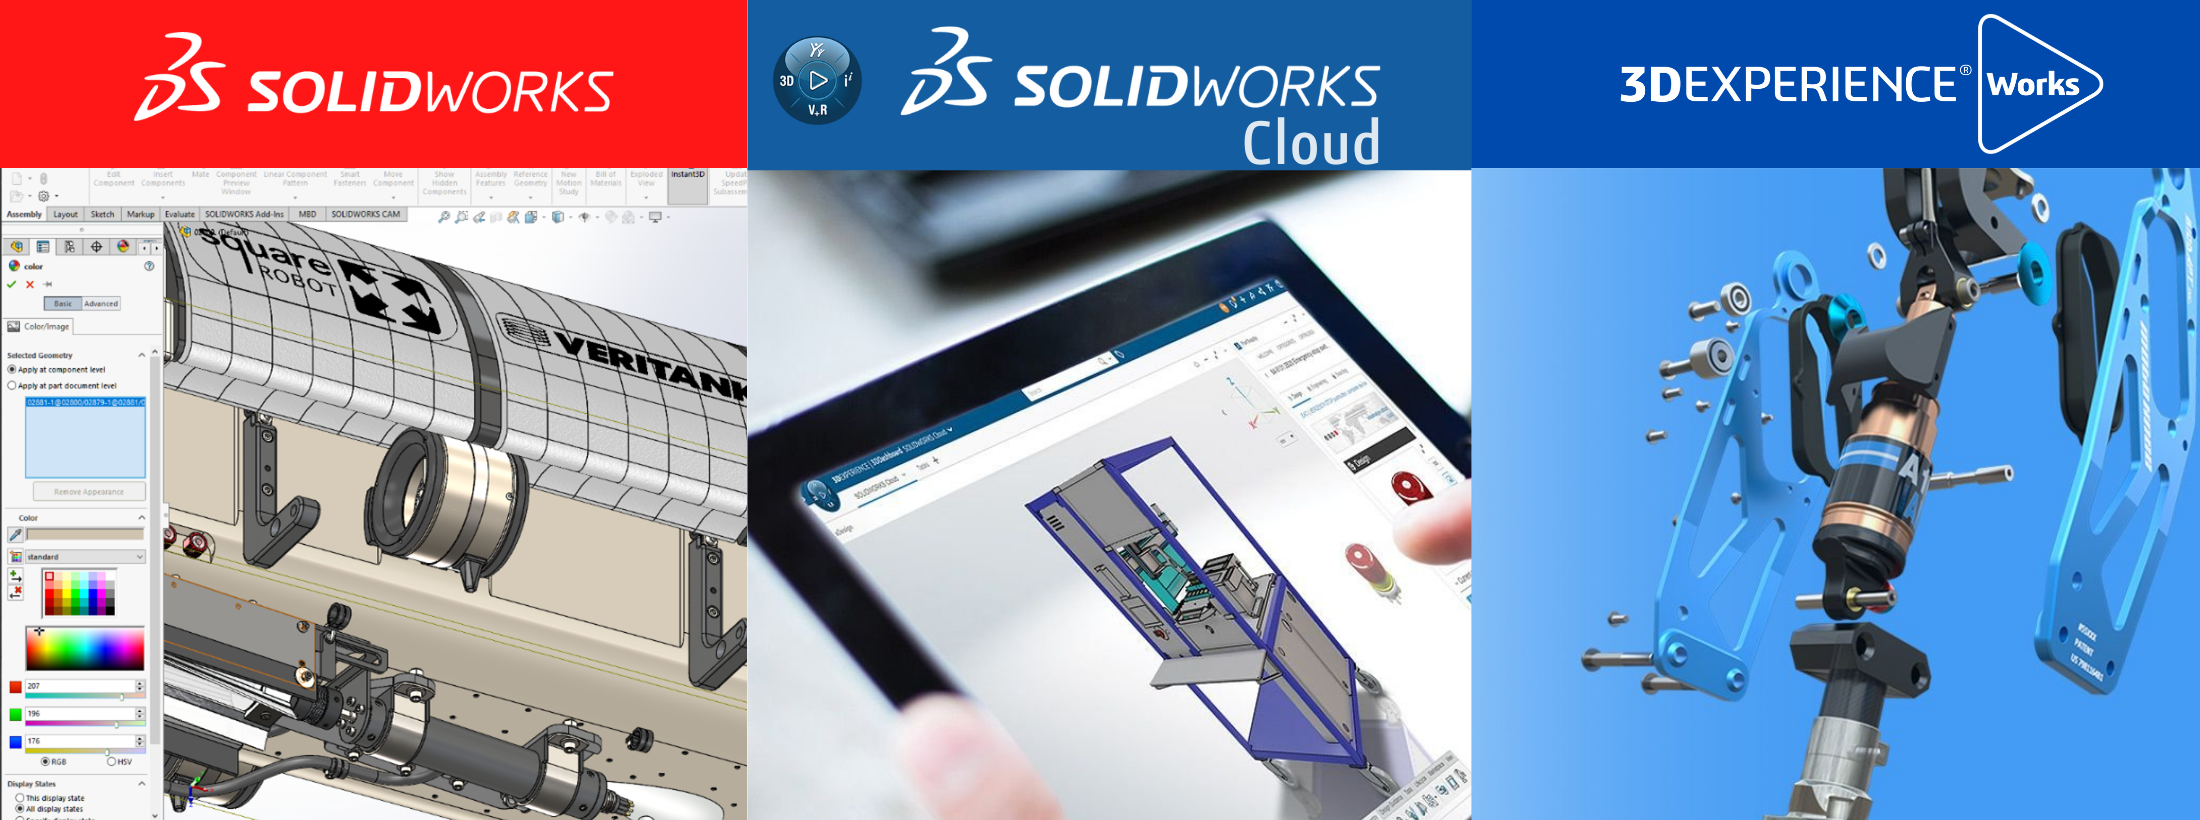 Choose Between SOLIDWORKS Desktop, SOLIDWORKS Cloud Offer, and 3DEXPERIENCE SOLIDWORKS